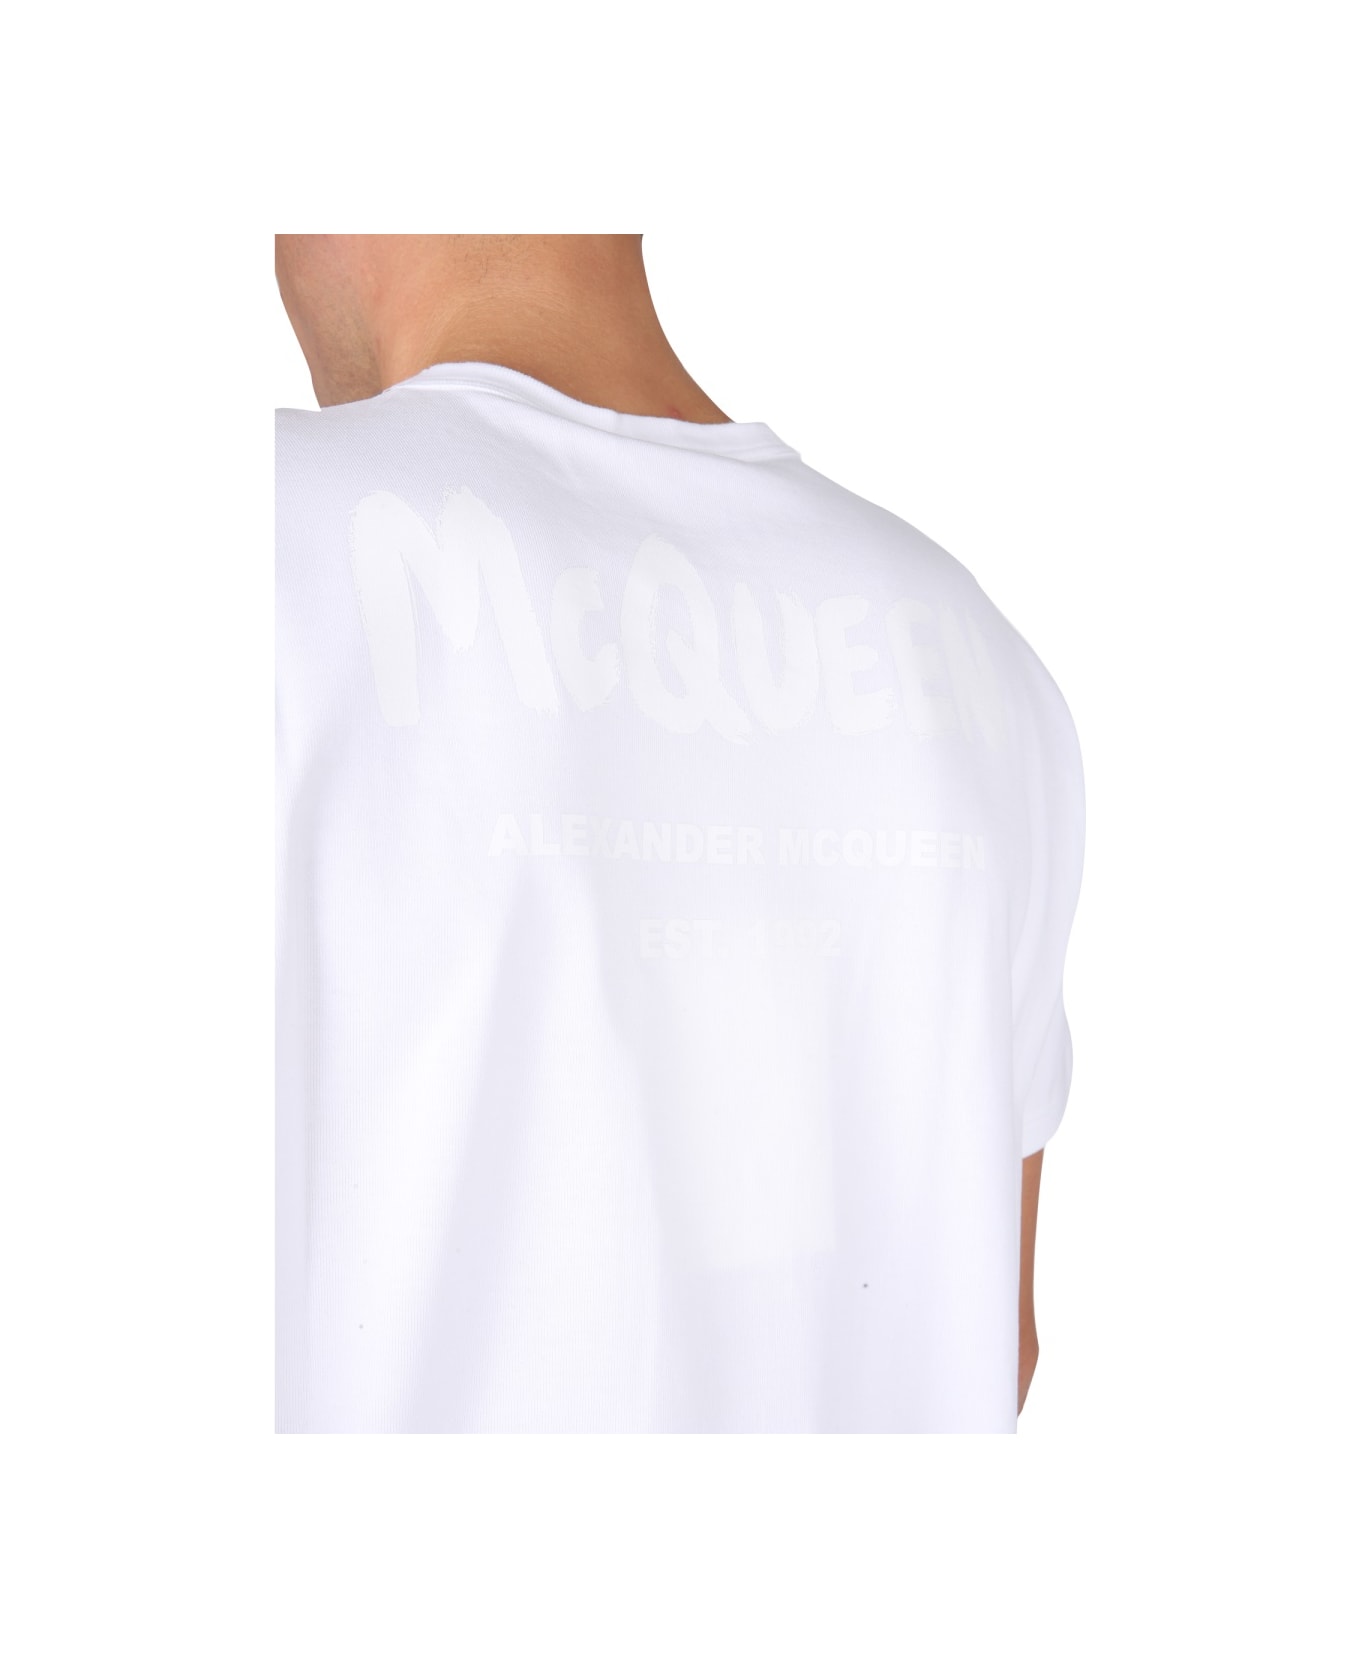 Alexander McQueen T-shirt With Graffiti Logo Print - WHITE シャツ